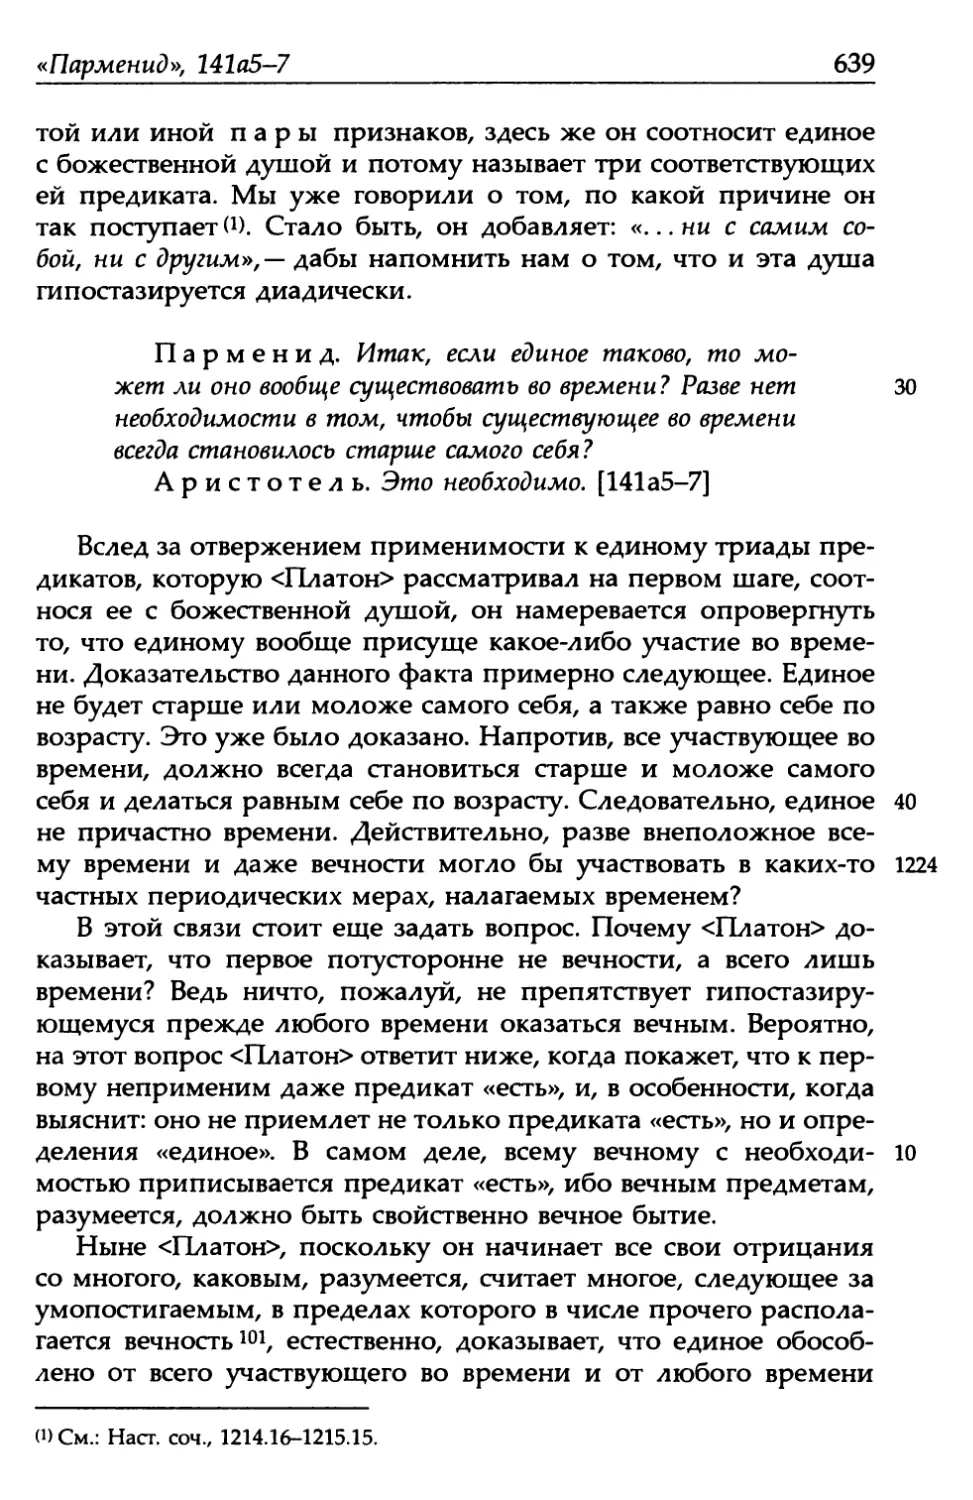 «Парменид», 141а5-7